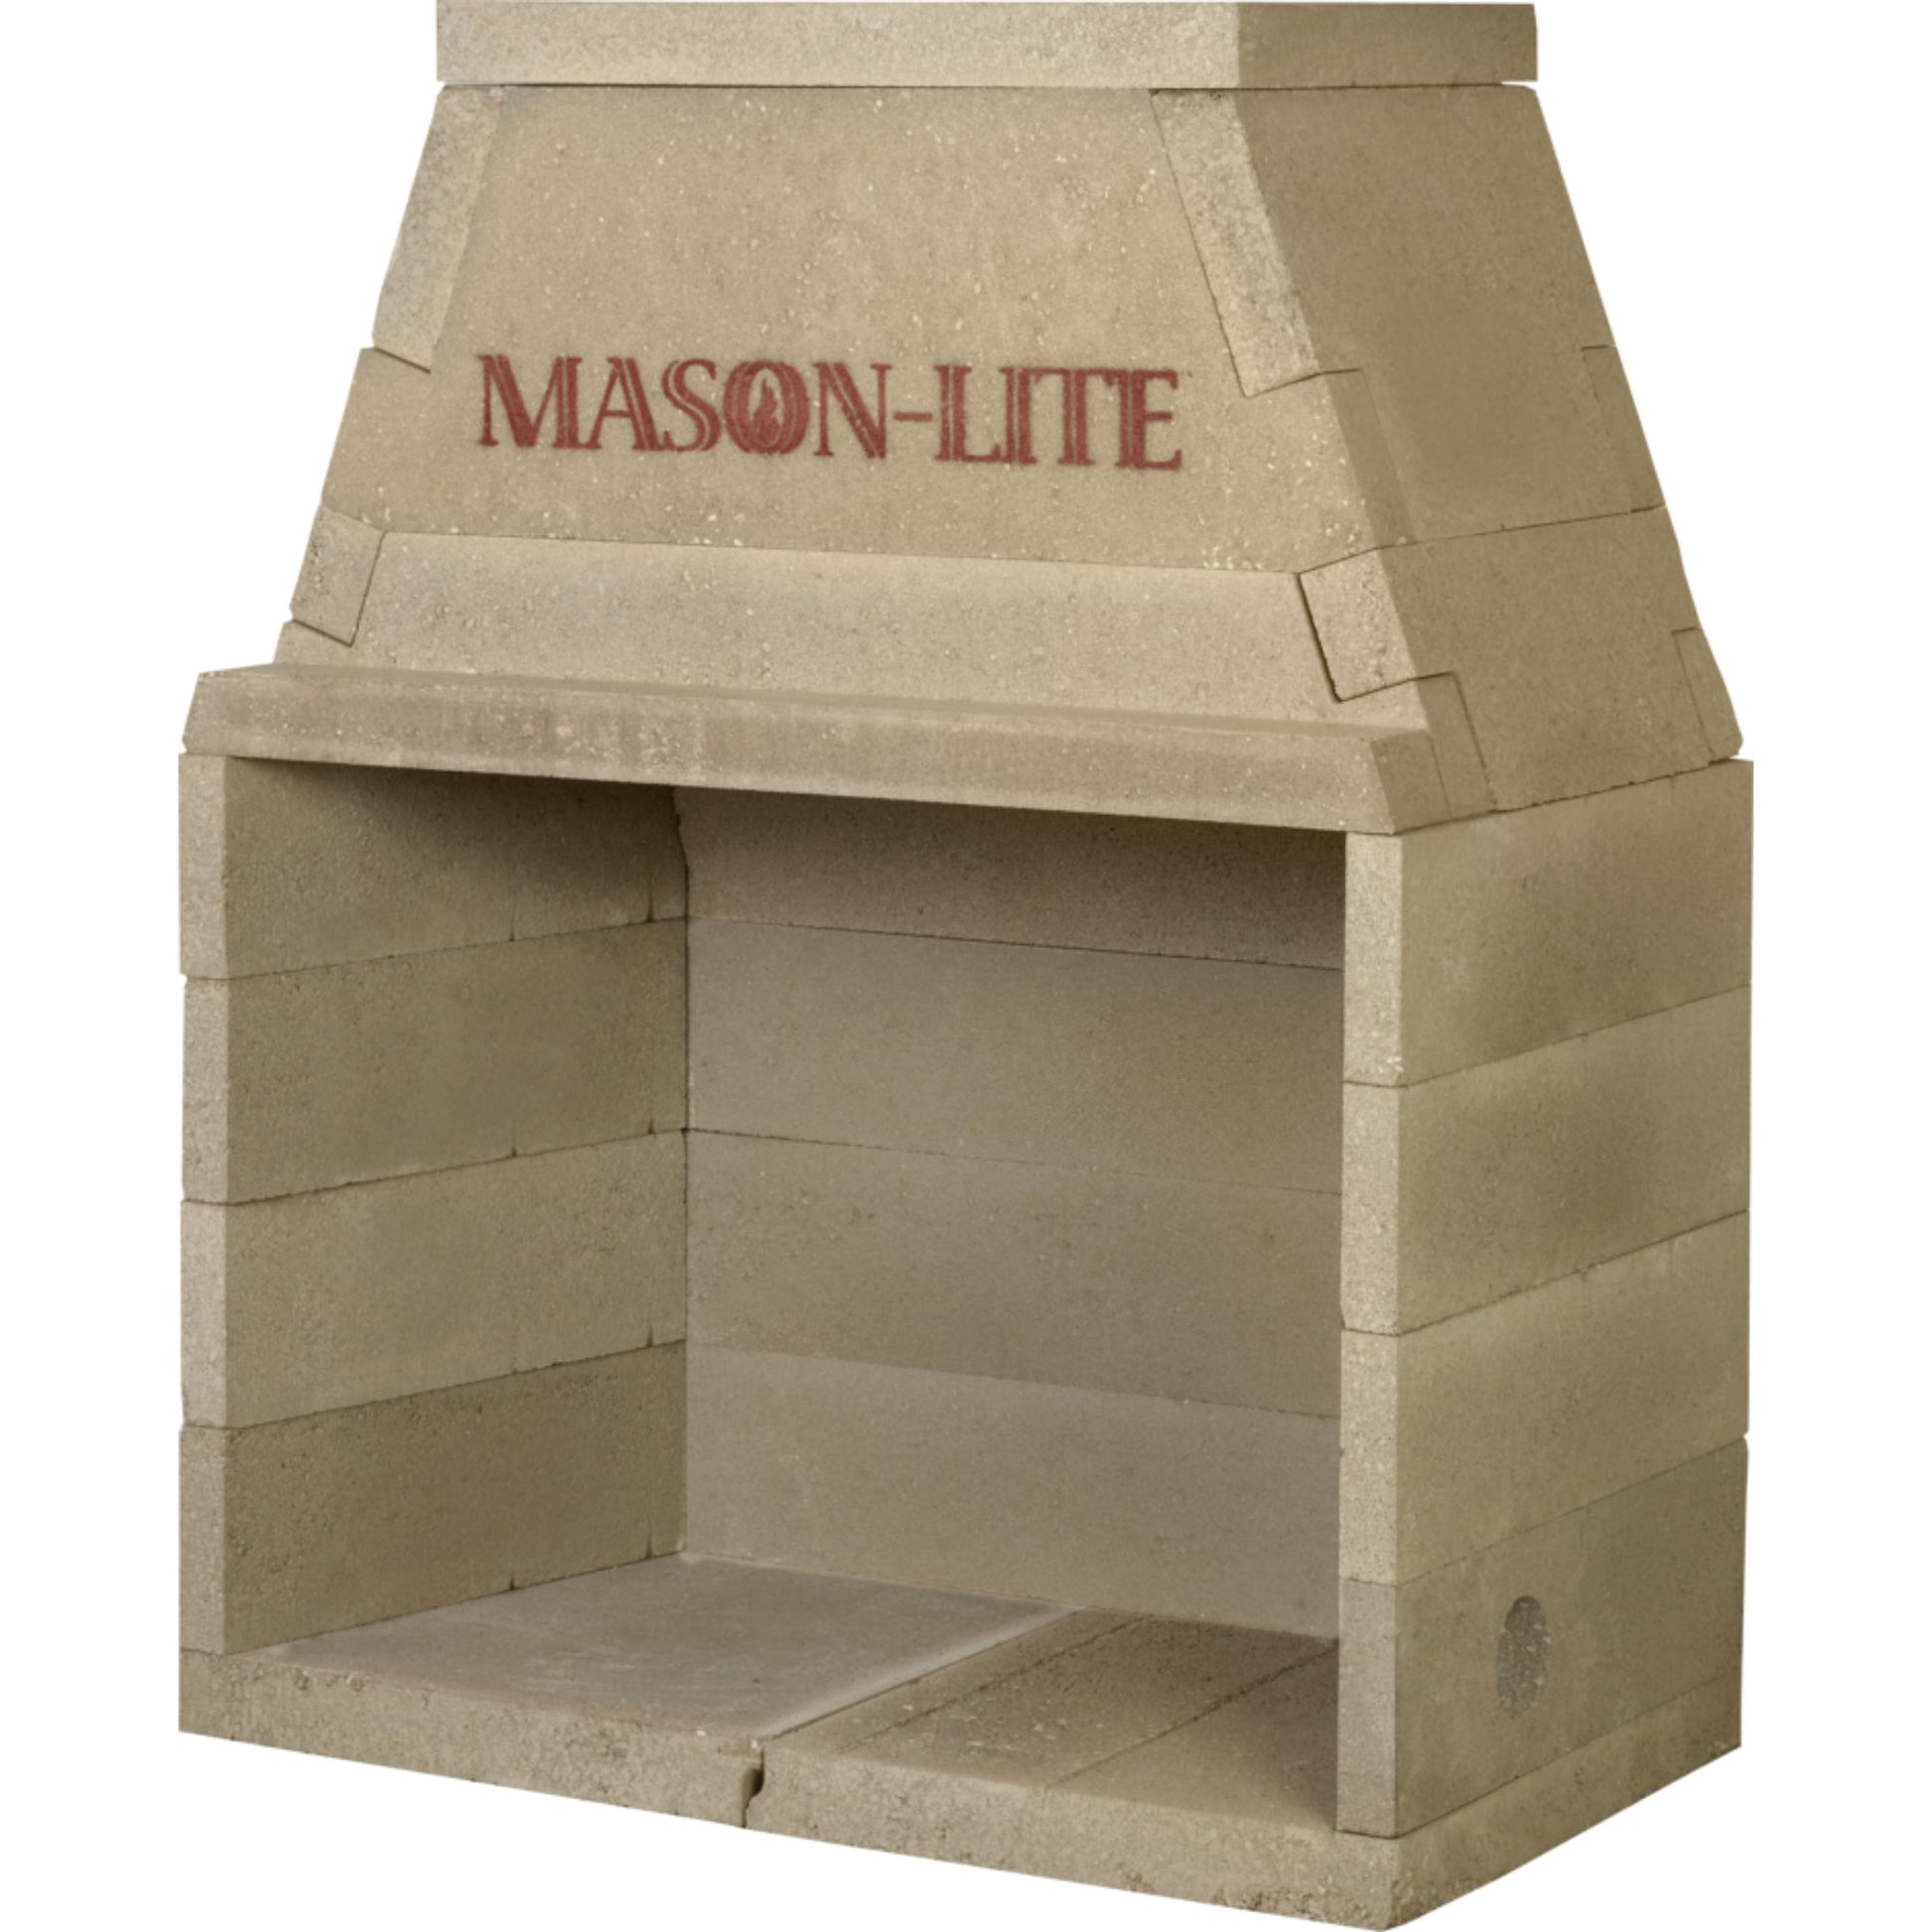 Mason-Lite 33" Pre-Cast Masonry Firebox Kit